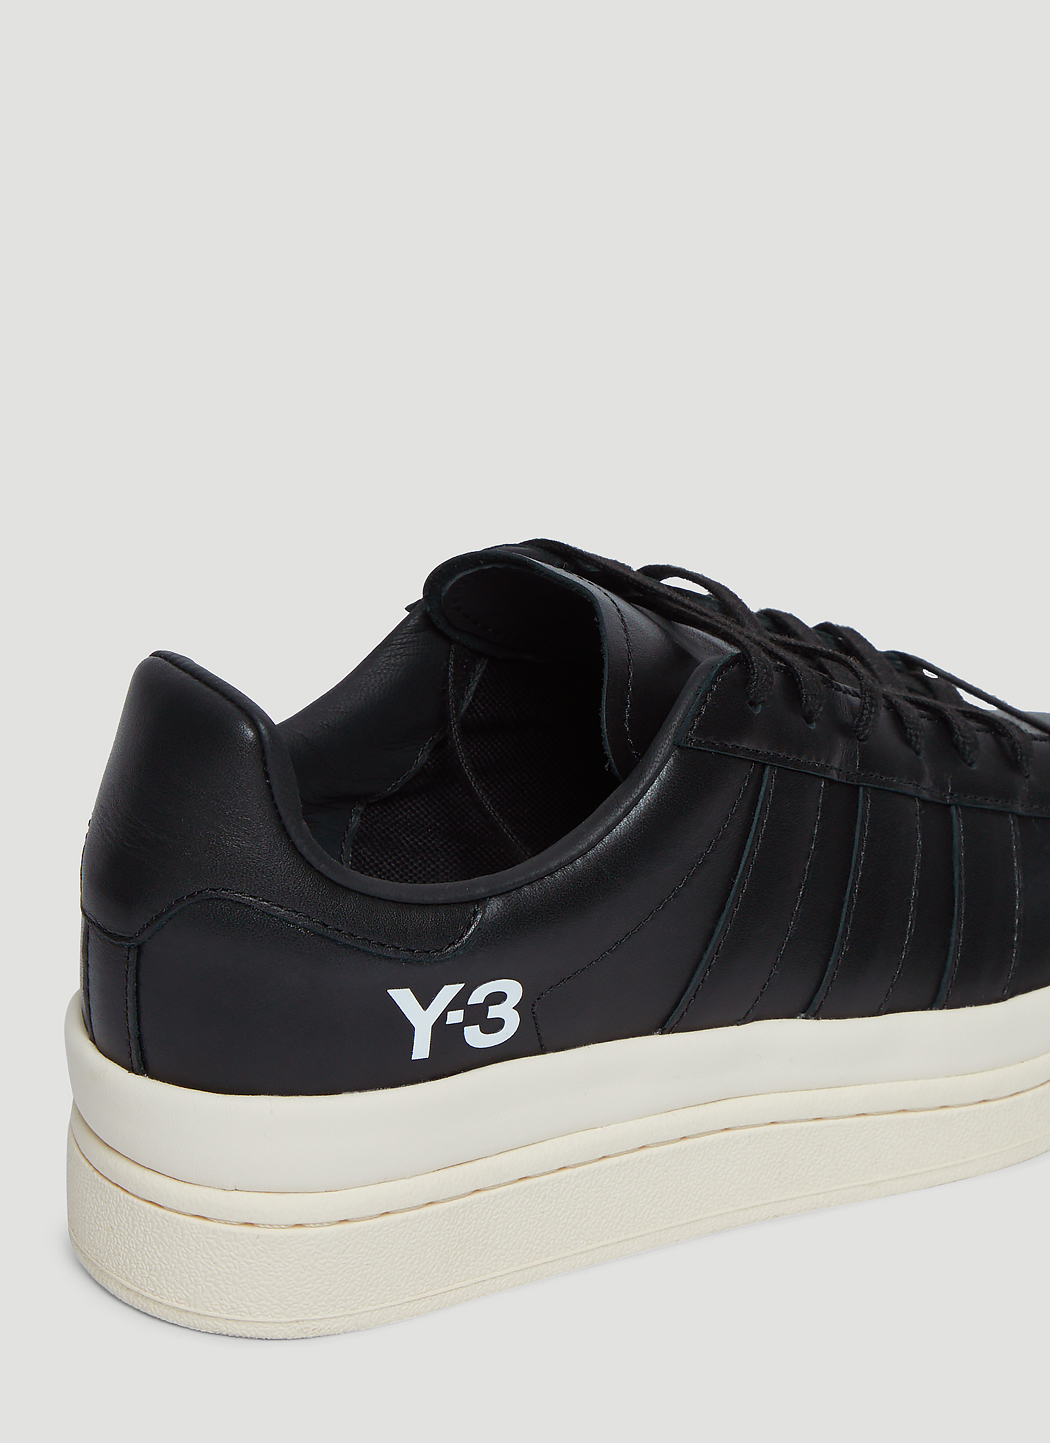 Y-3 Hicho Sneakers in Black | LN-CC